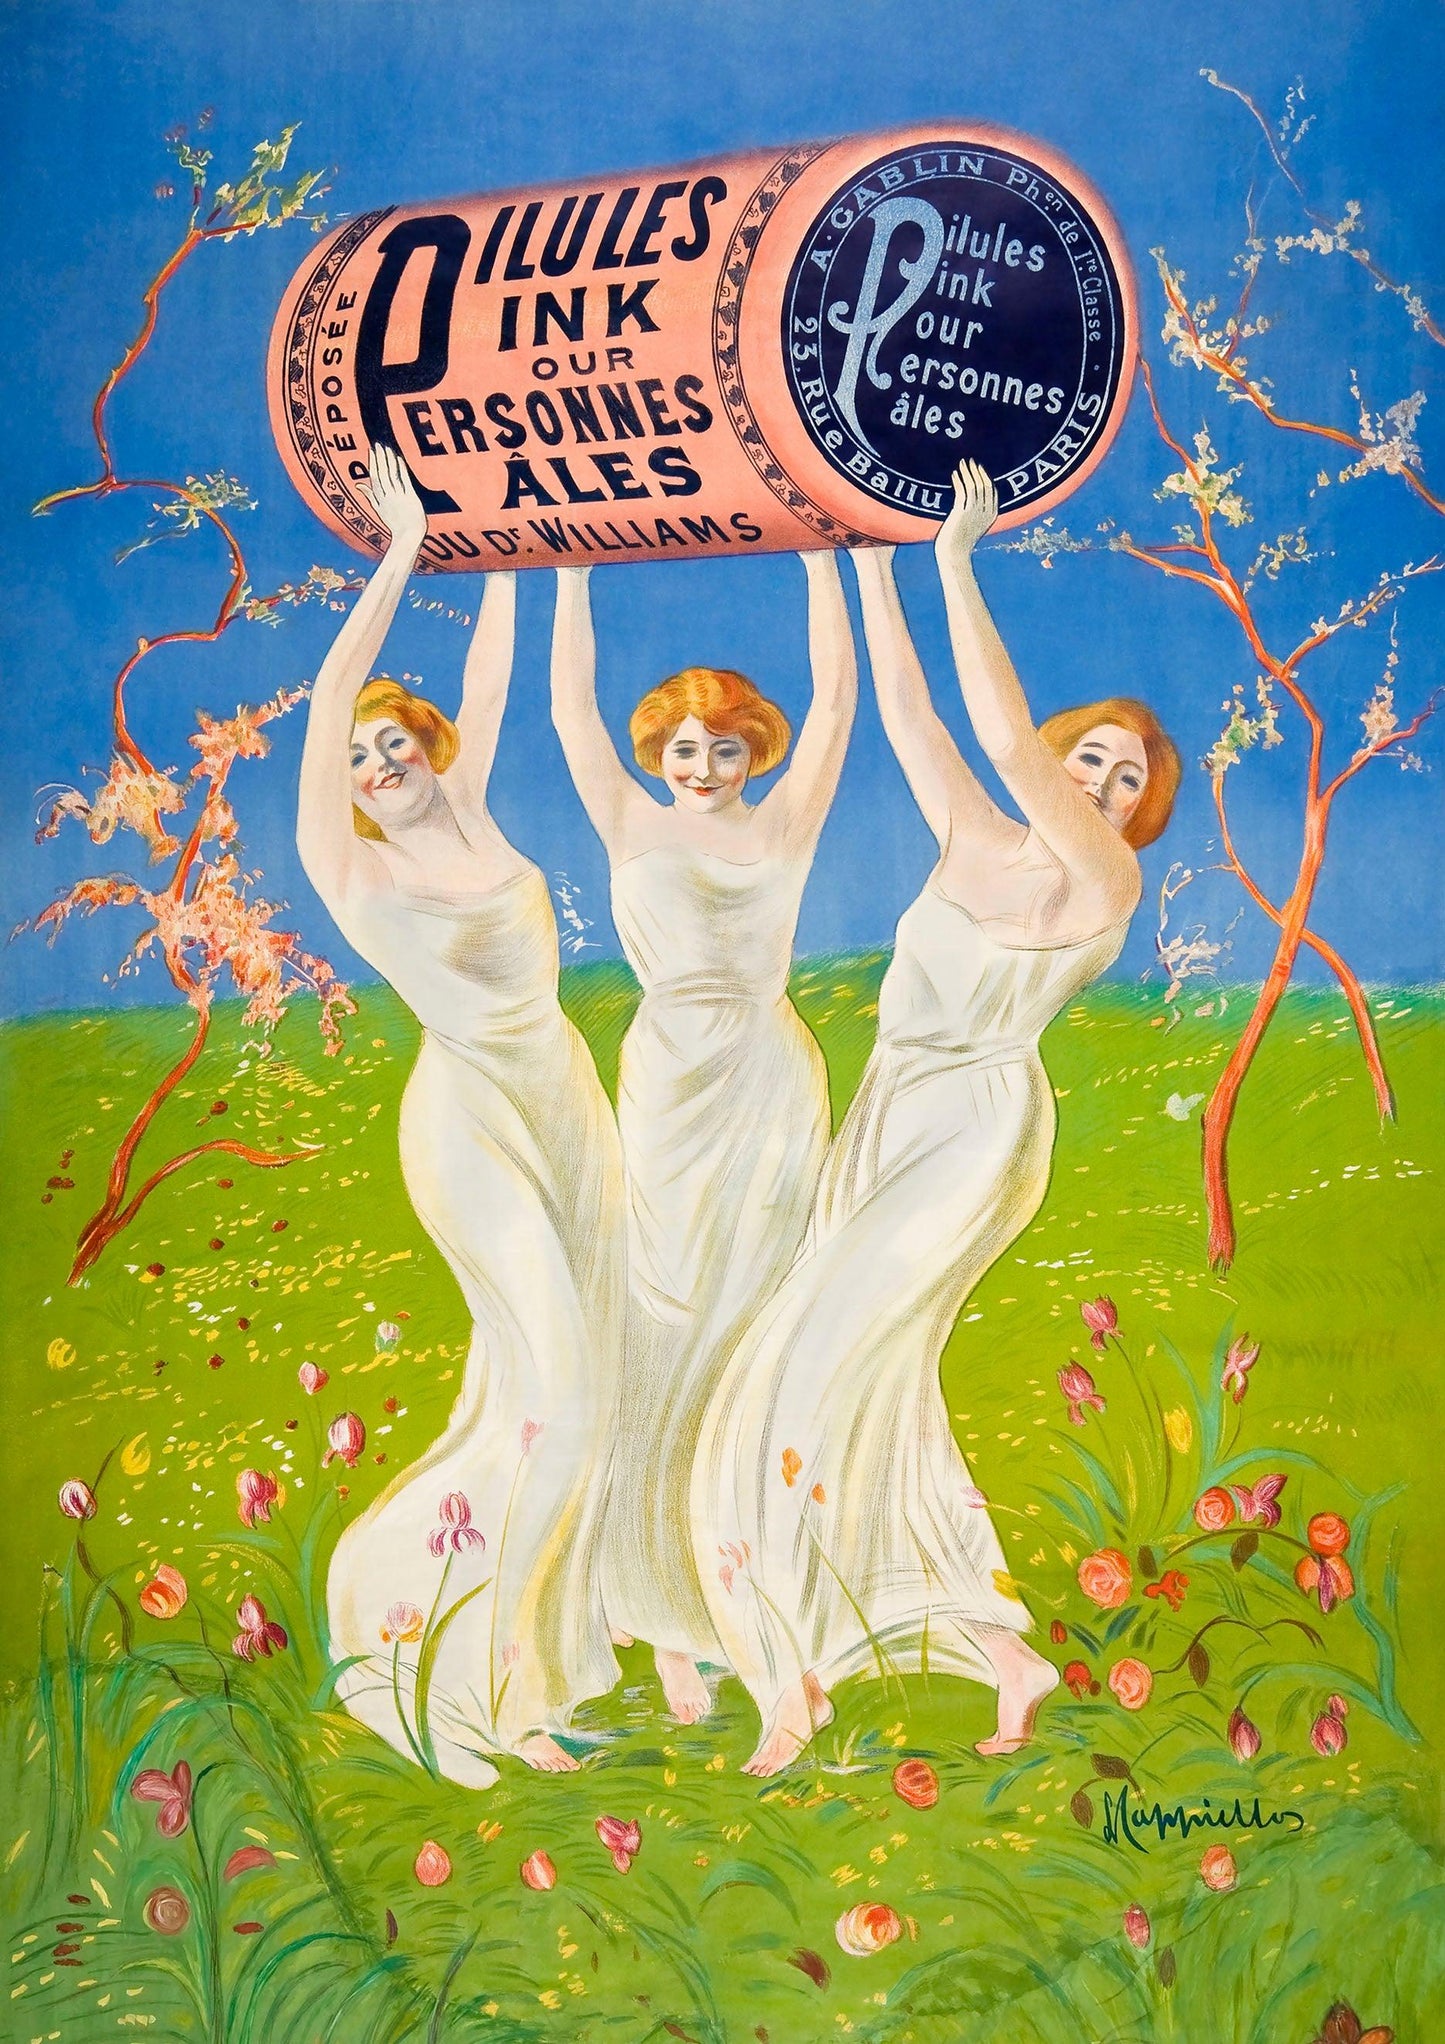 PINK PILLS POSTER: Vintage French Vitamin Advert Art Print - Pimlico Prints